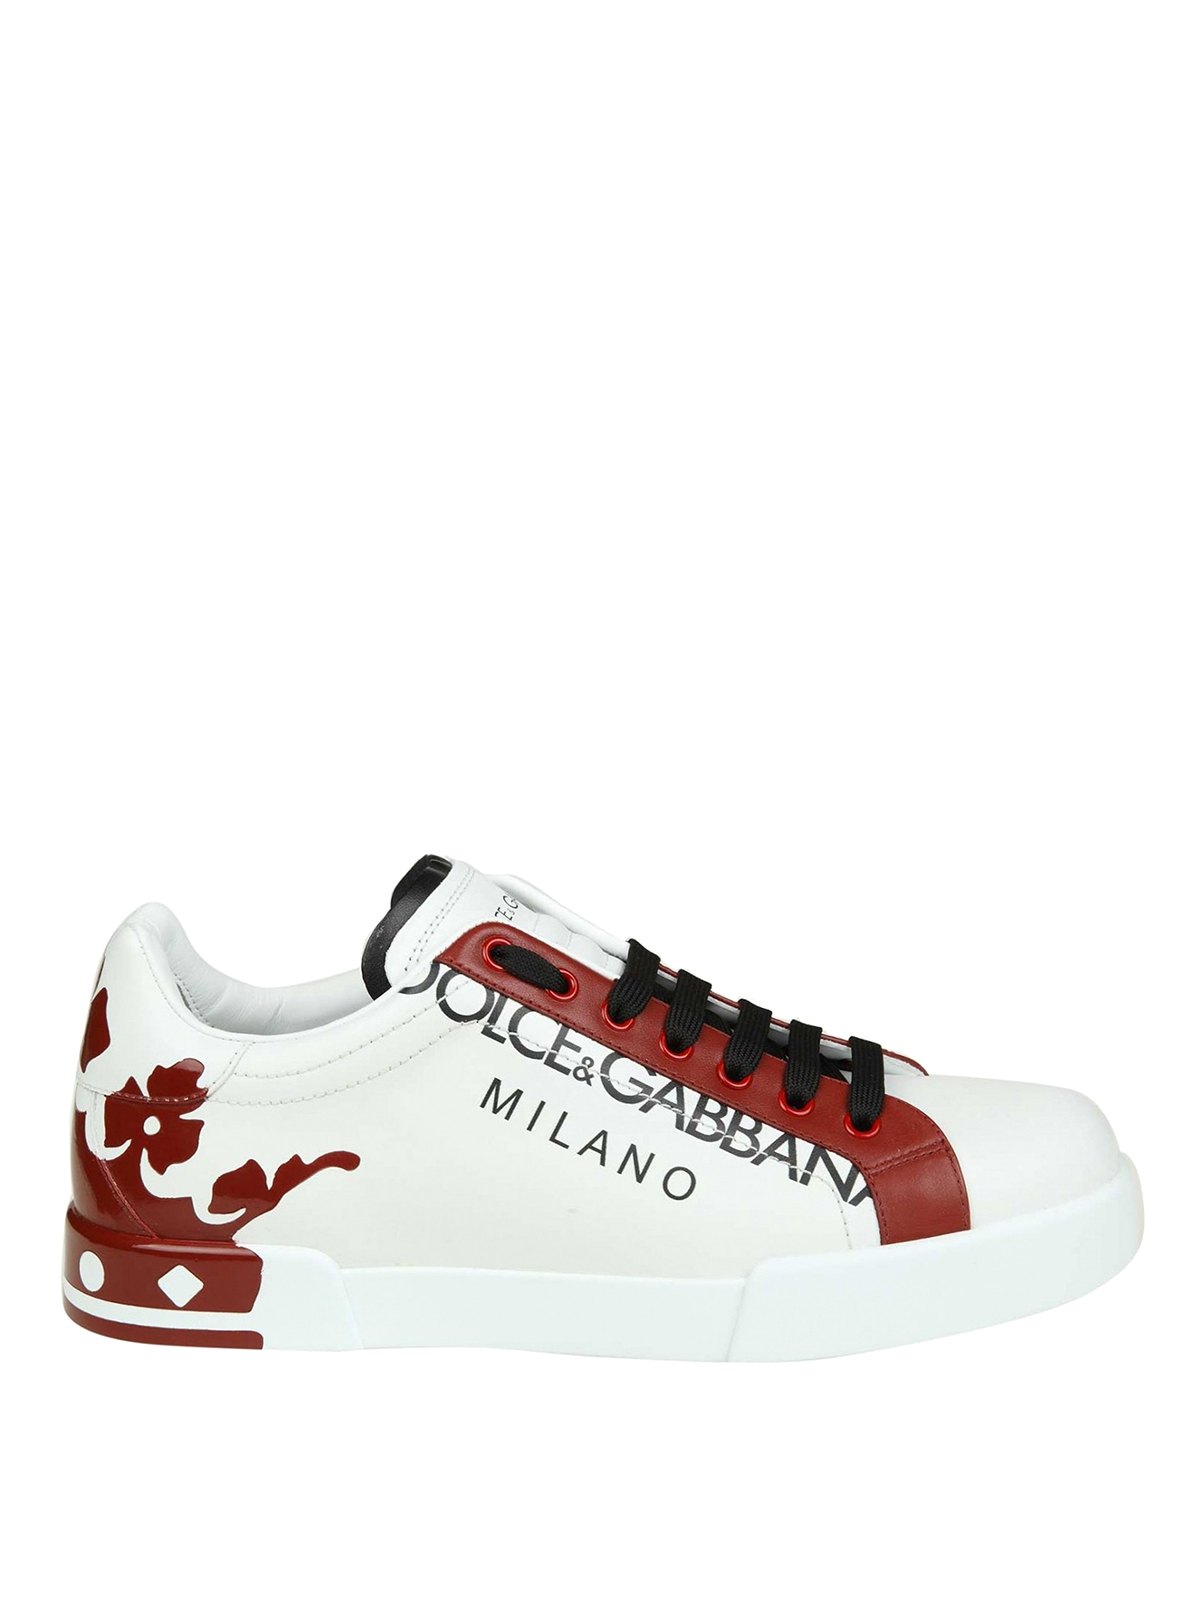 Dolce \u0026 Gabbana - Sneaker Portofino in pelle bianche e rosse - sneakers -  CS1612AU45589926